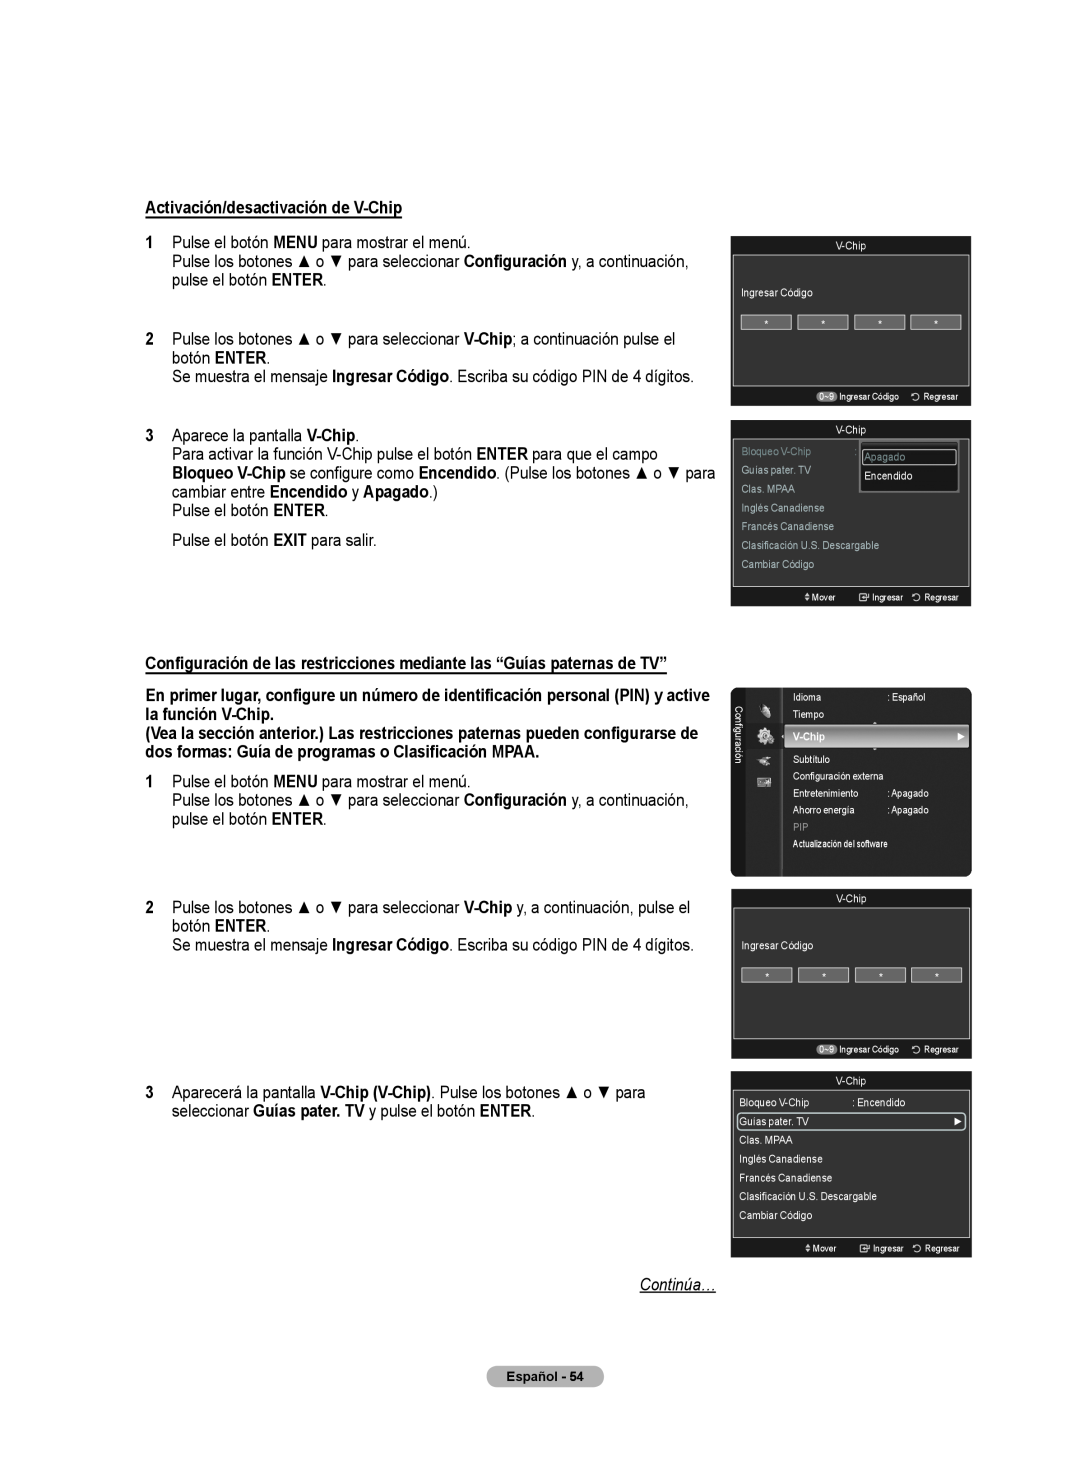 Samsung 510 user manual Activación/desactivación de V-Chip, Continúa…, Guías pater. TV, Clas.. MPAA, Inglés Canadiense 